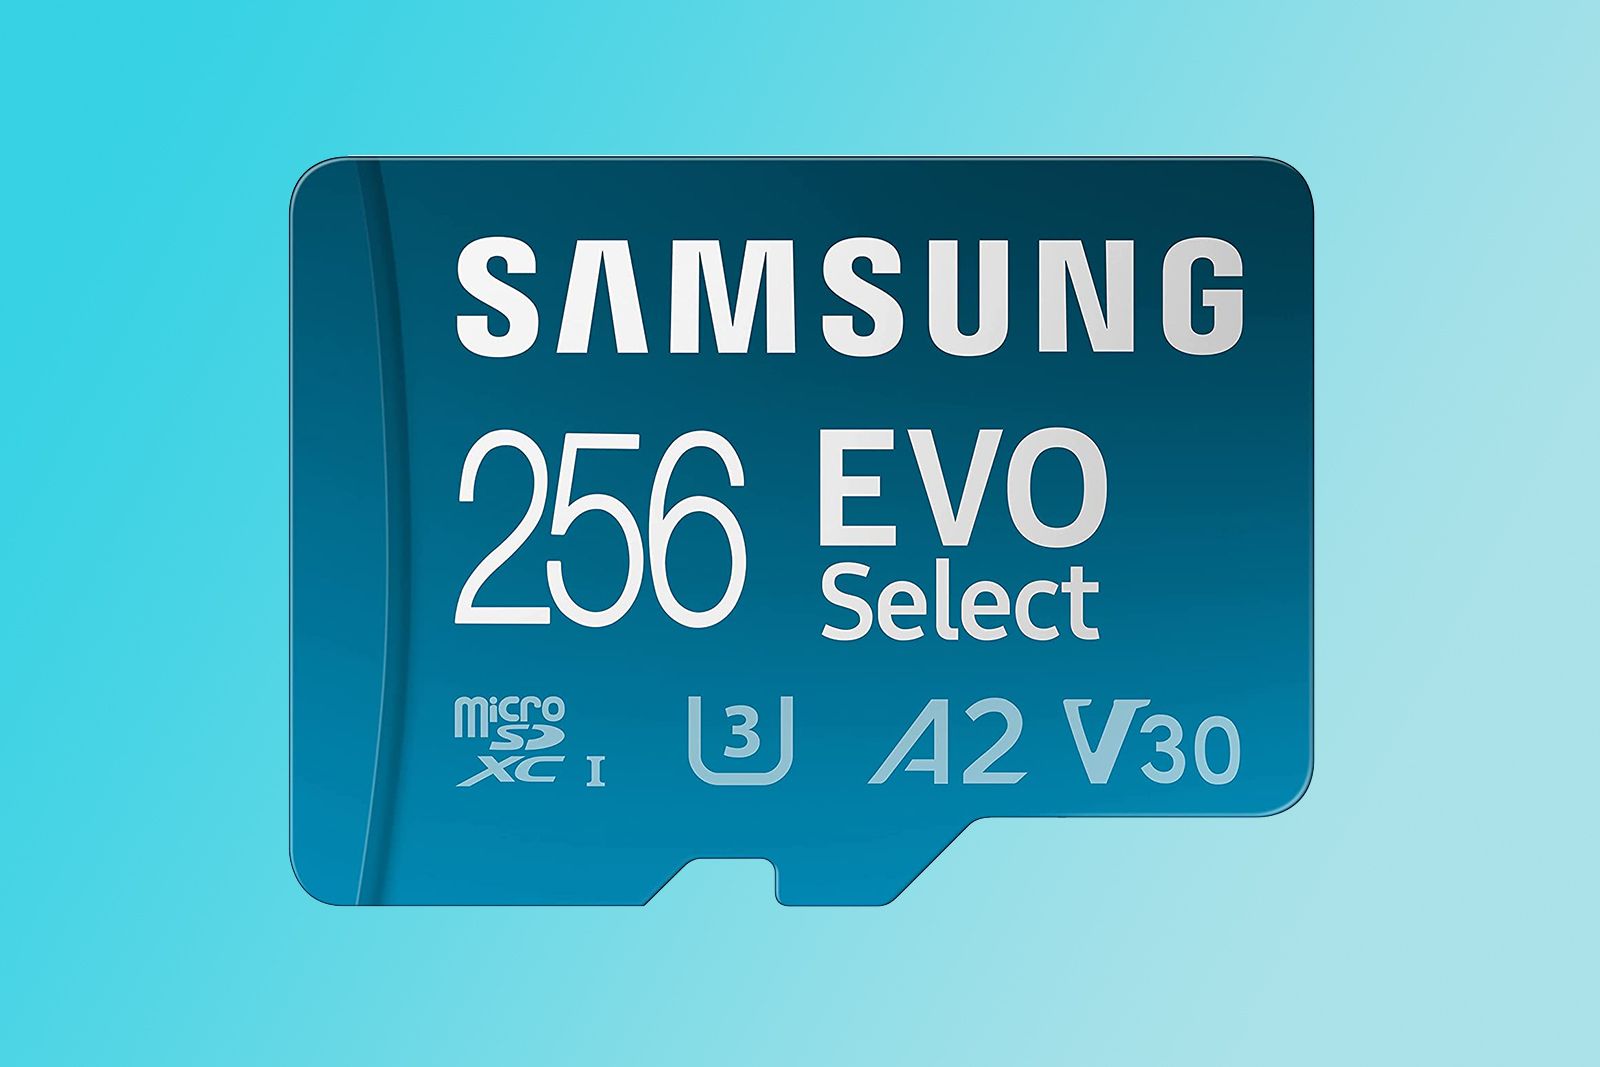 Samsung Evo Select 256GB microSD